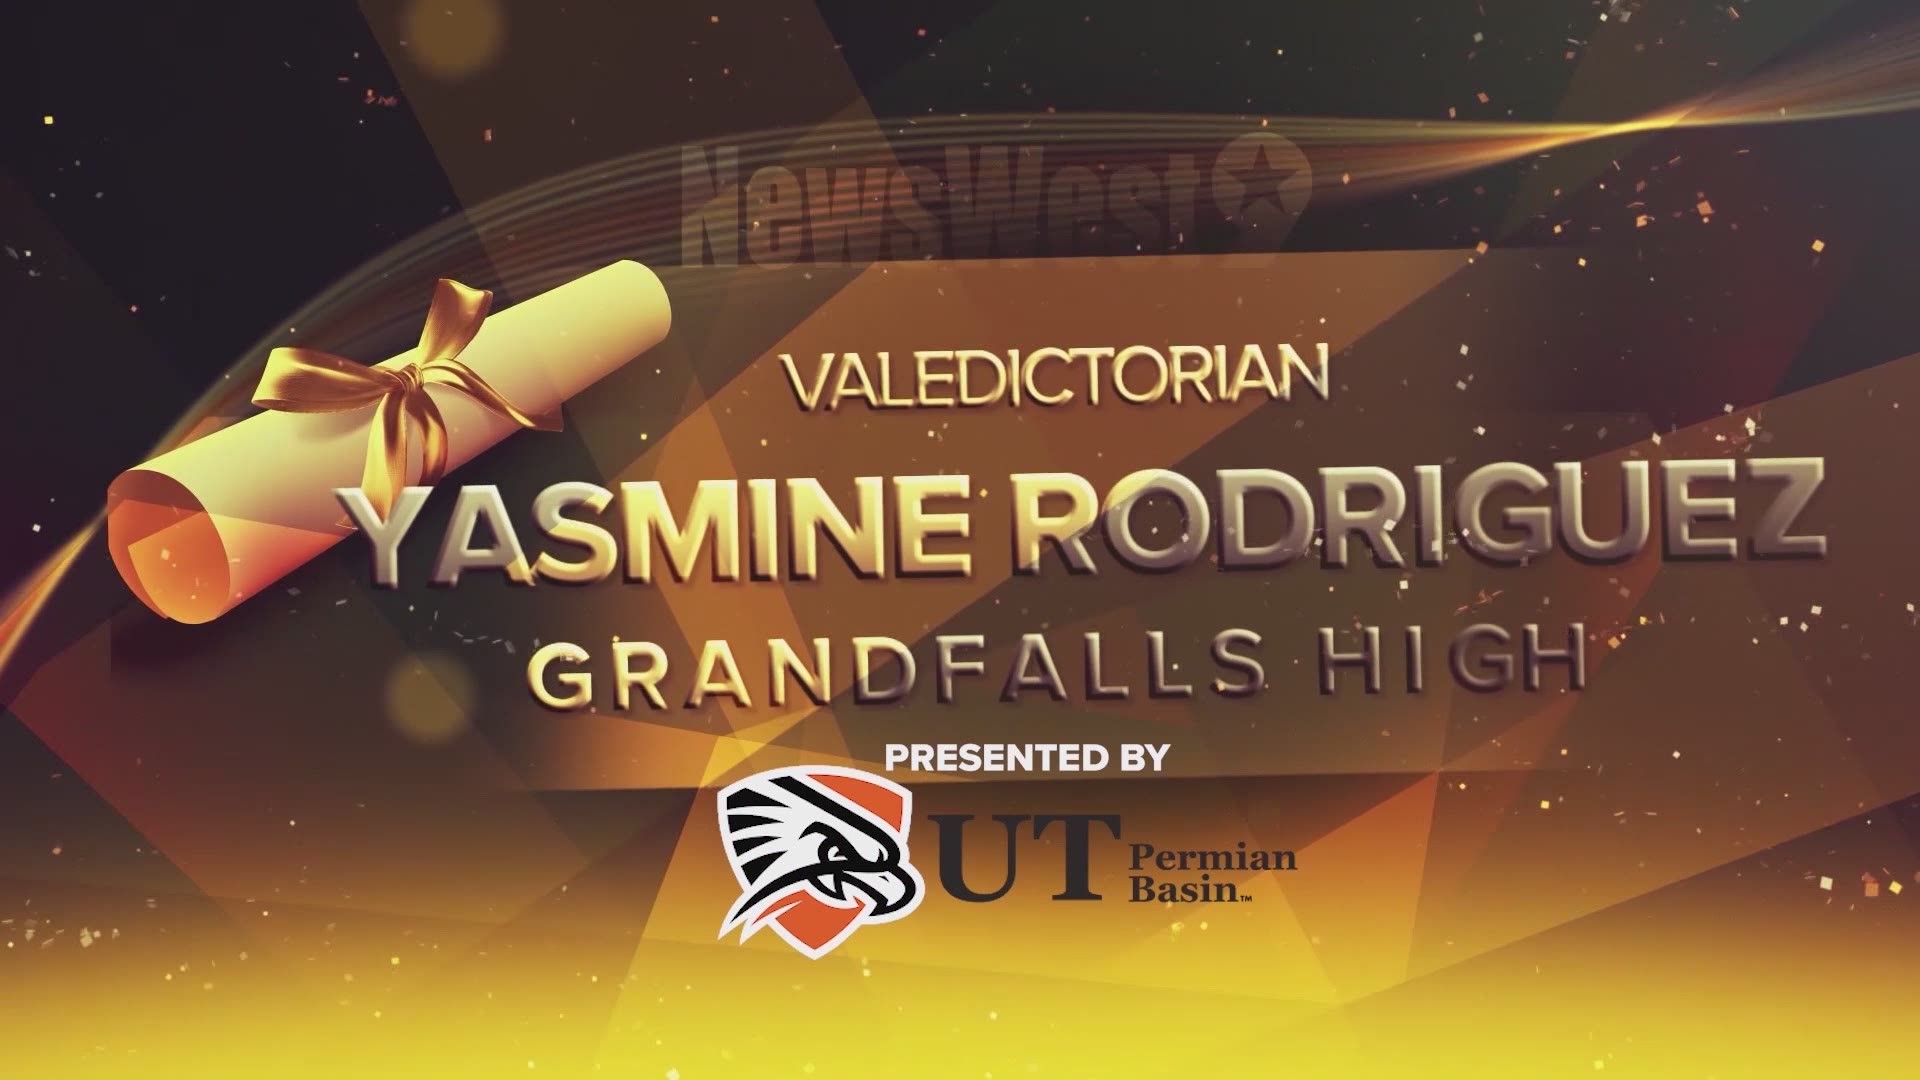 Yasmin Rodriguez gives the Valedictorian speech for Grandfalls High